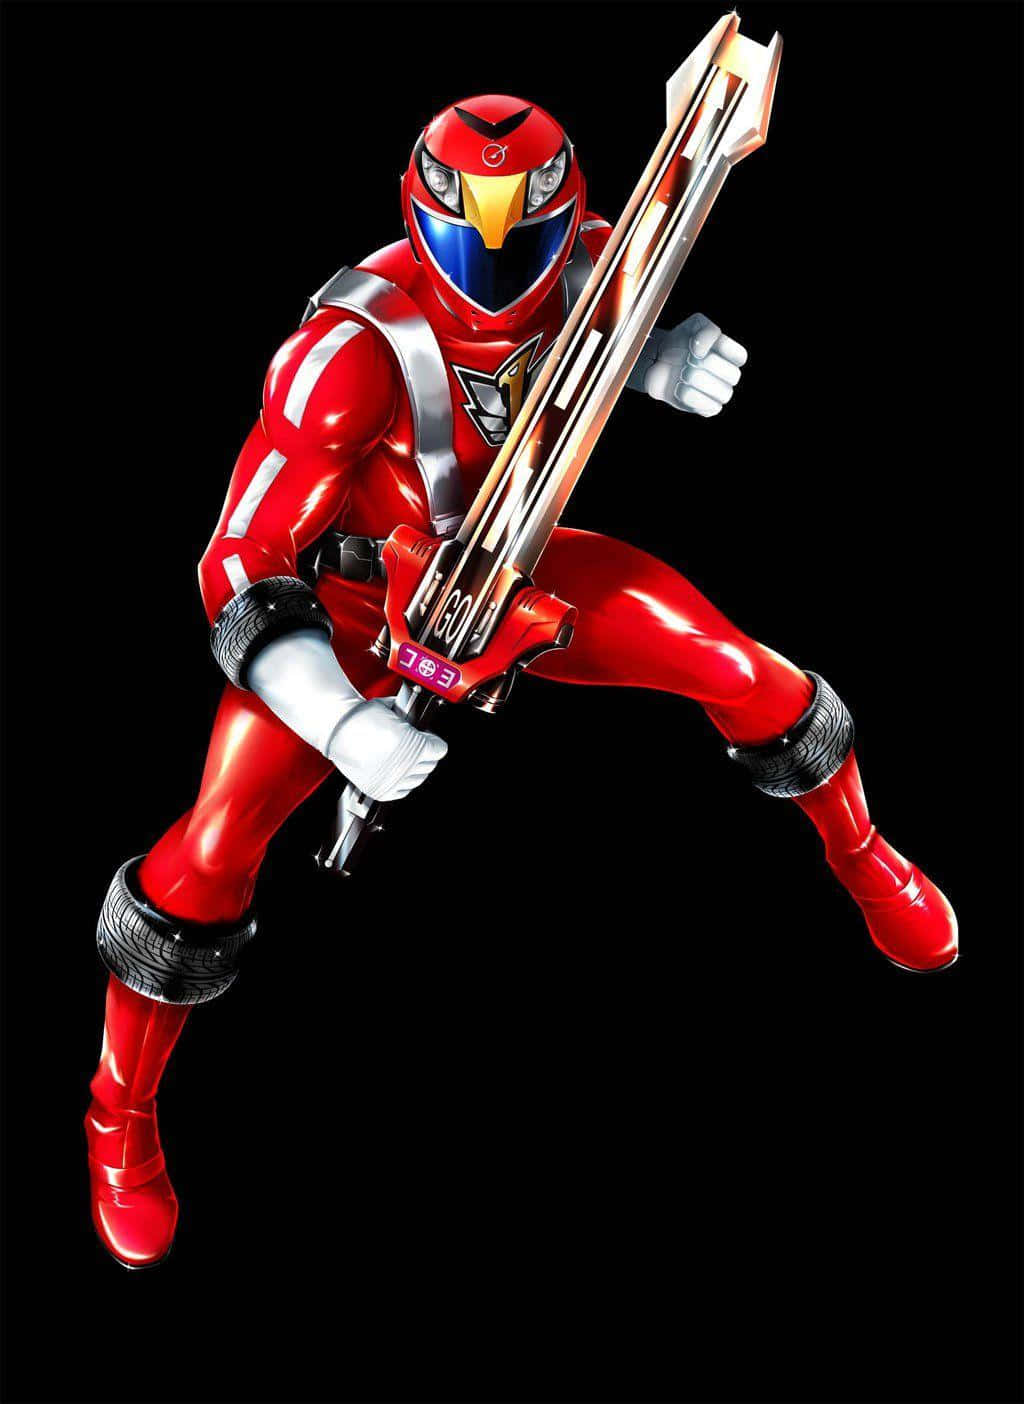 Red Ranger Action Pose Wallpaper